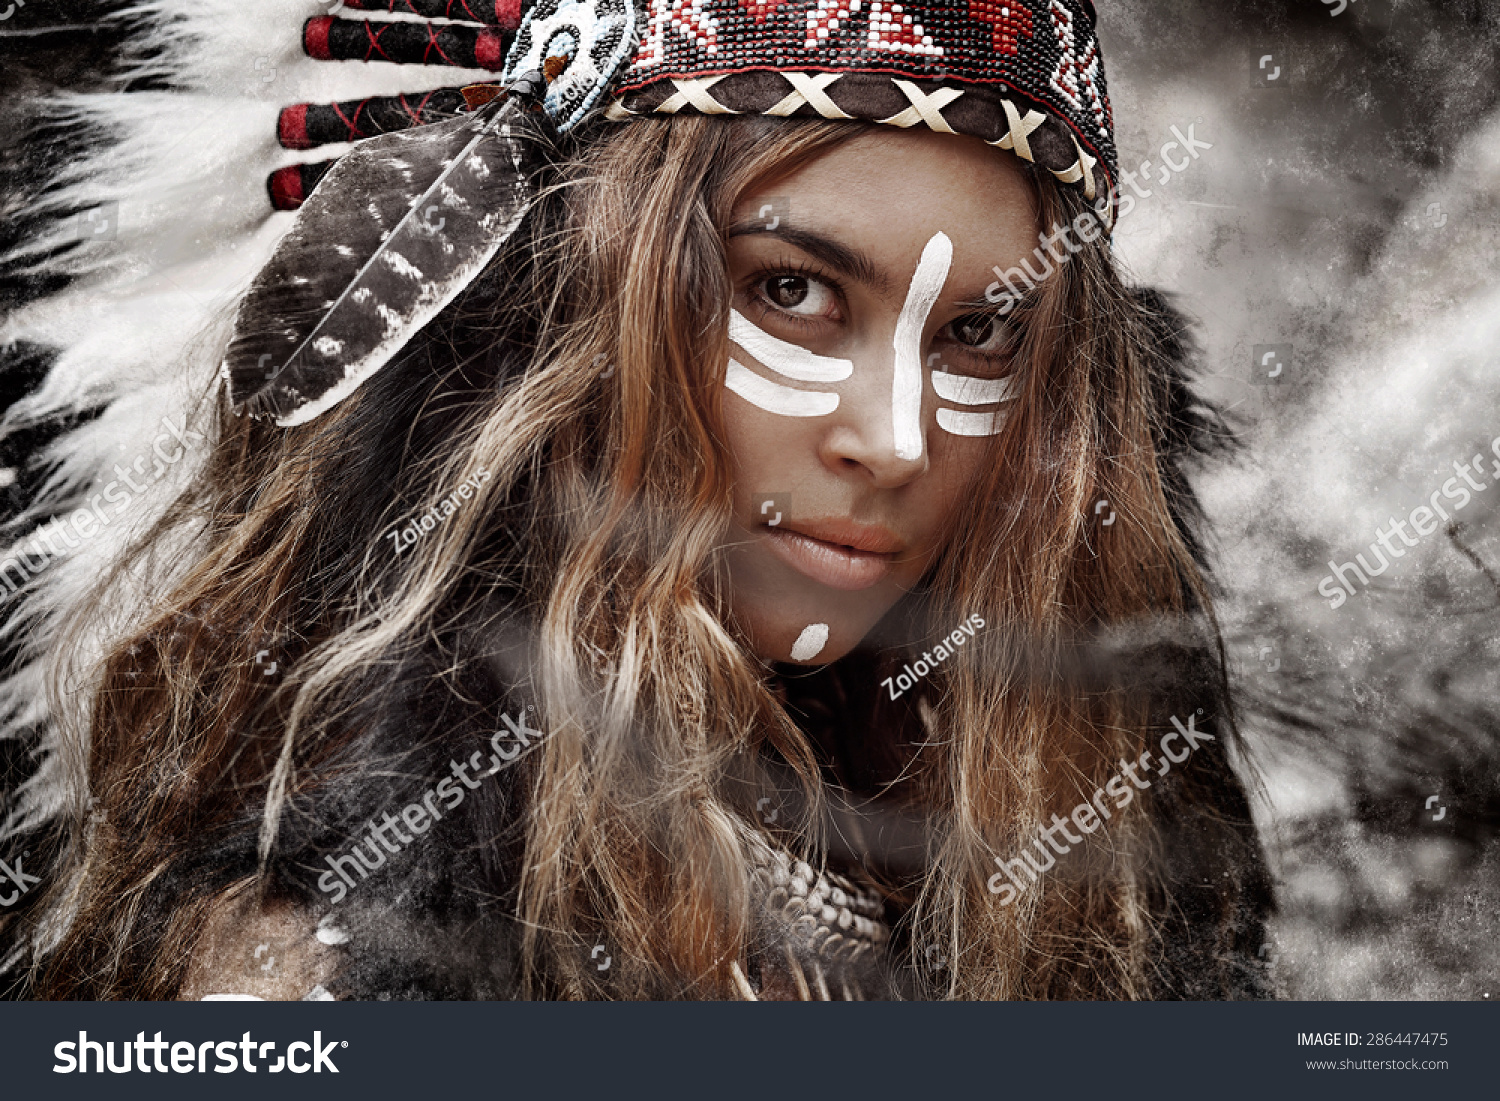 American Indian Woman Stock Photo 286447475 - Shutterstock